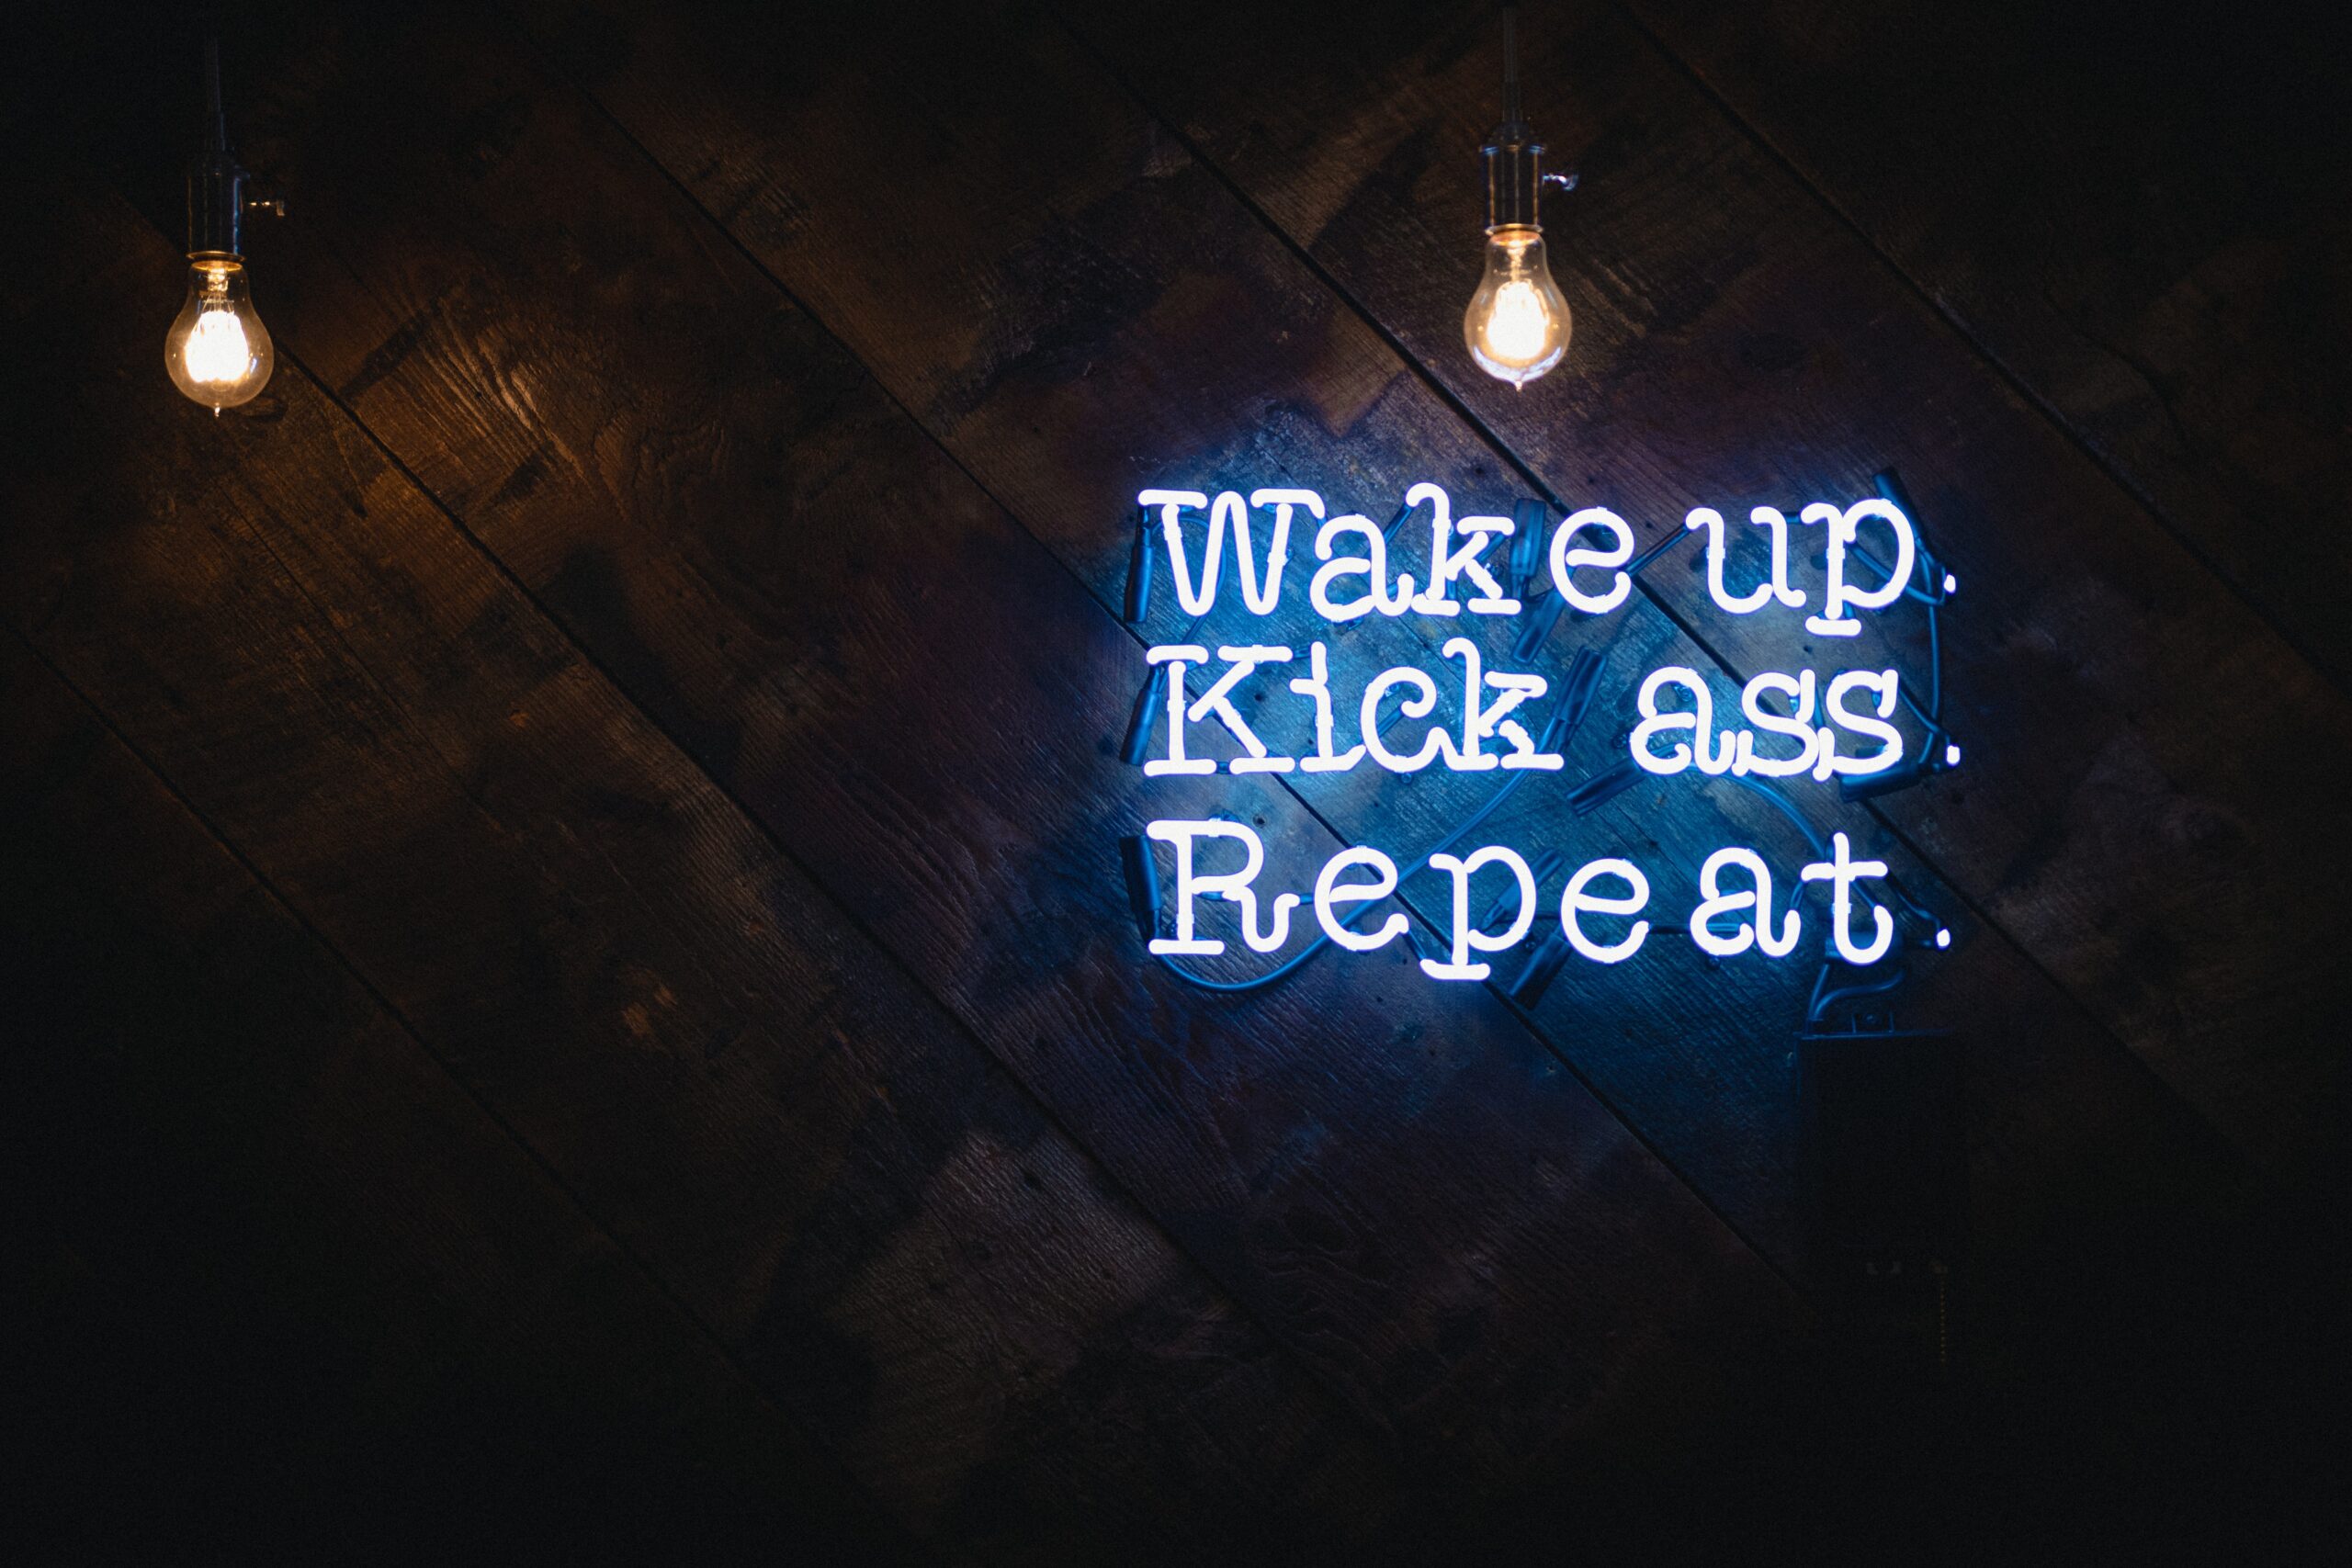 "Wake up. Kick ass. Repeat"